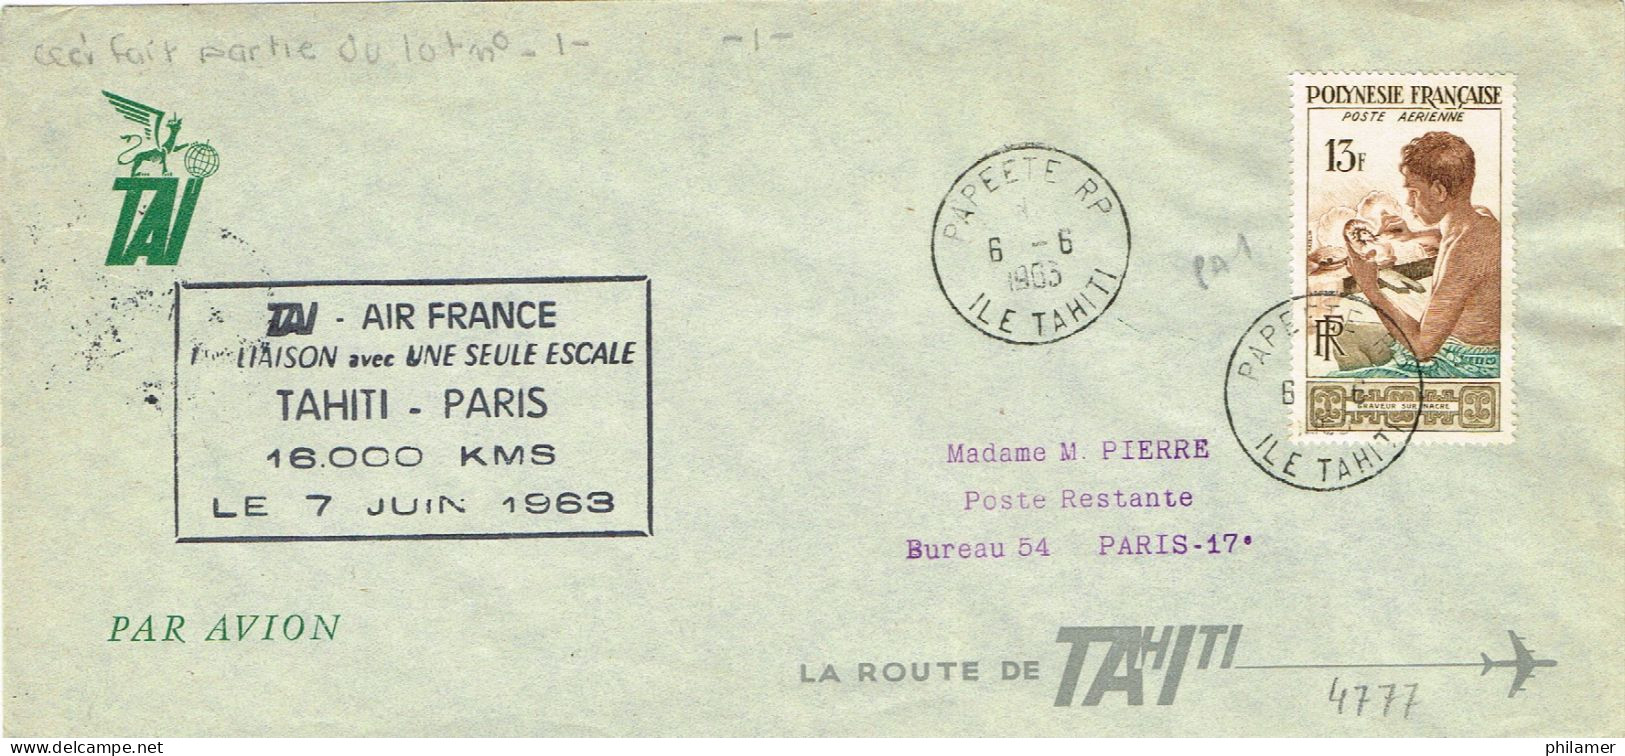 Polynesie Francaise French Polynesia FFC Premier Vol Aerien Air France Tahiti Paris 7/6/63 BE - Lettres & Documents